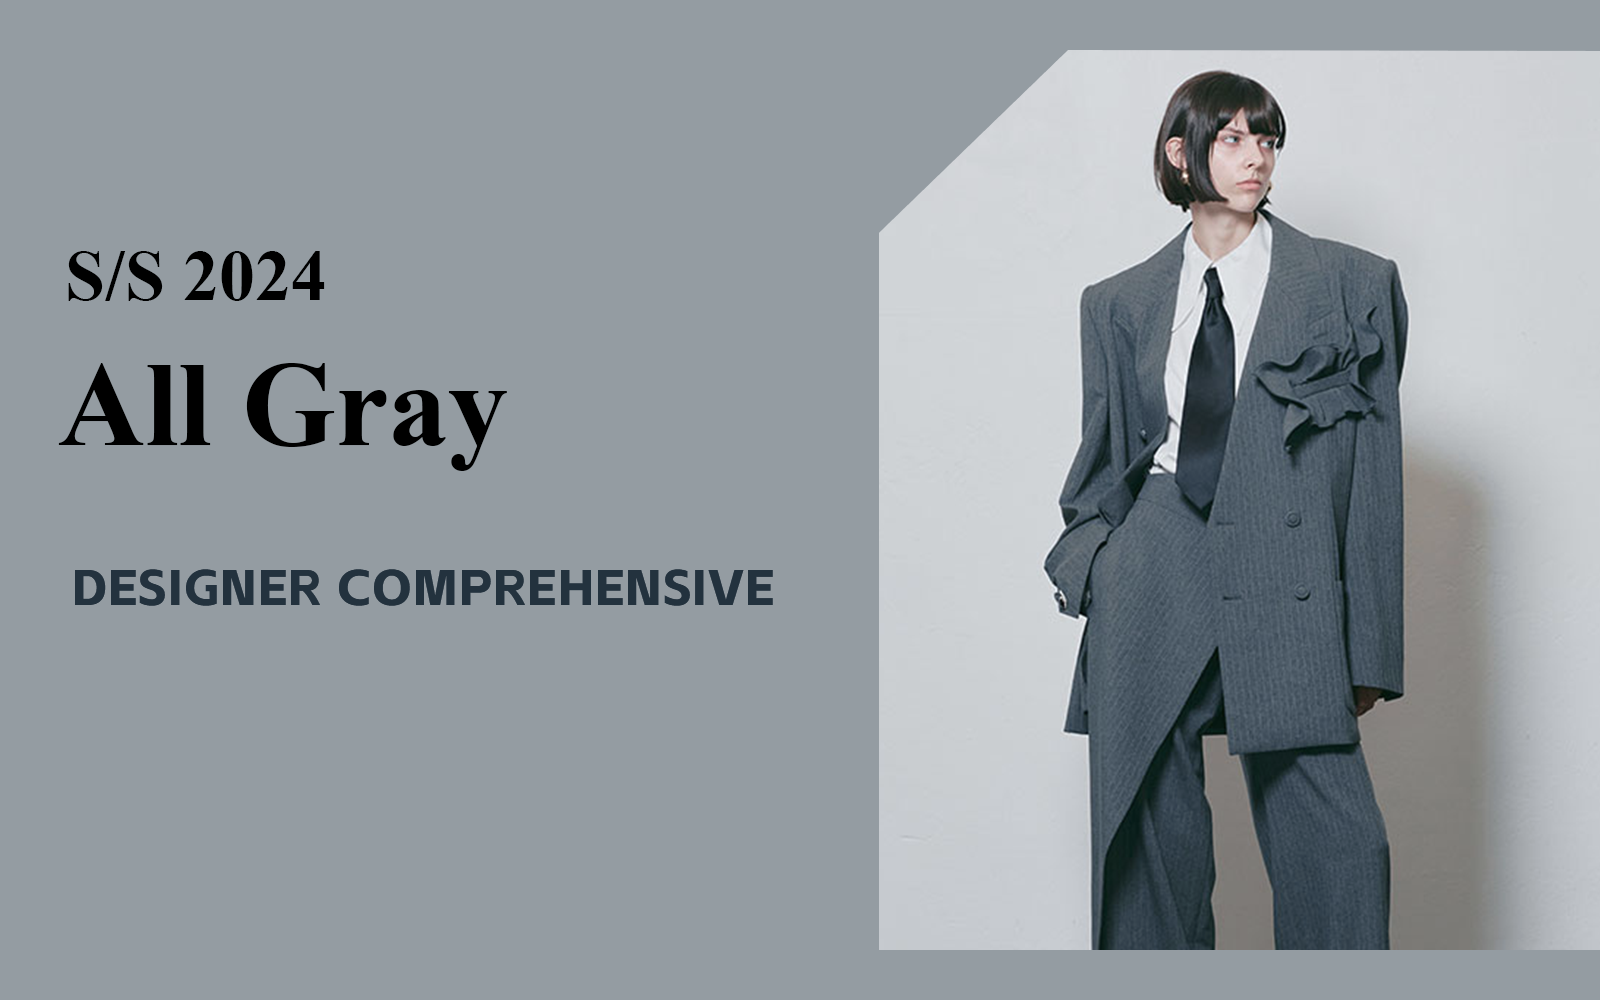 ALL Gray -- The Comprehensive Analysis of Womenswear Designer Brand